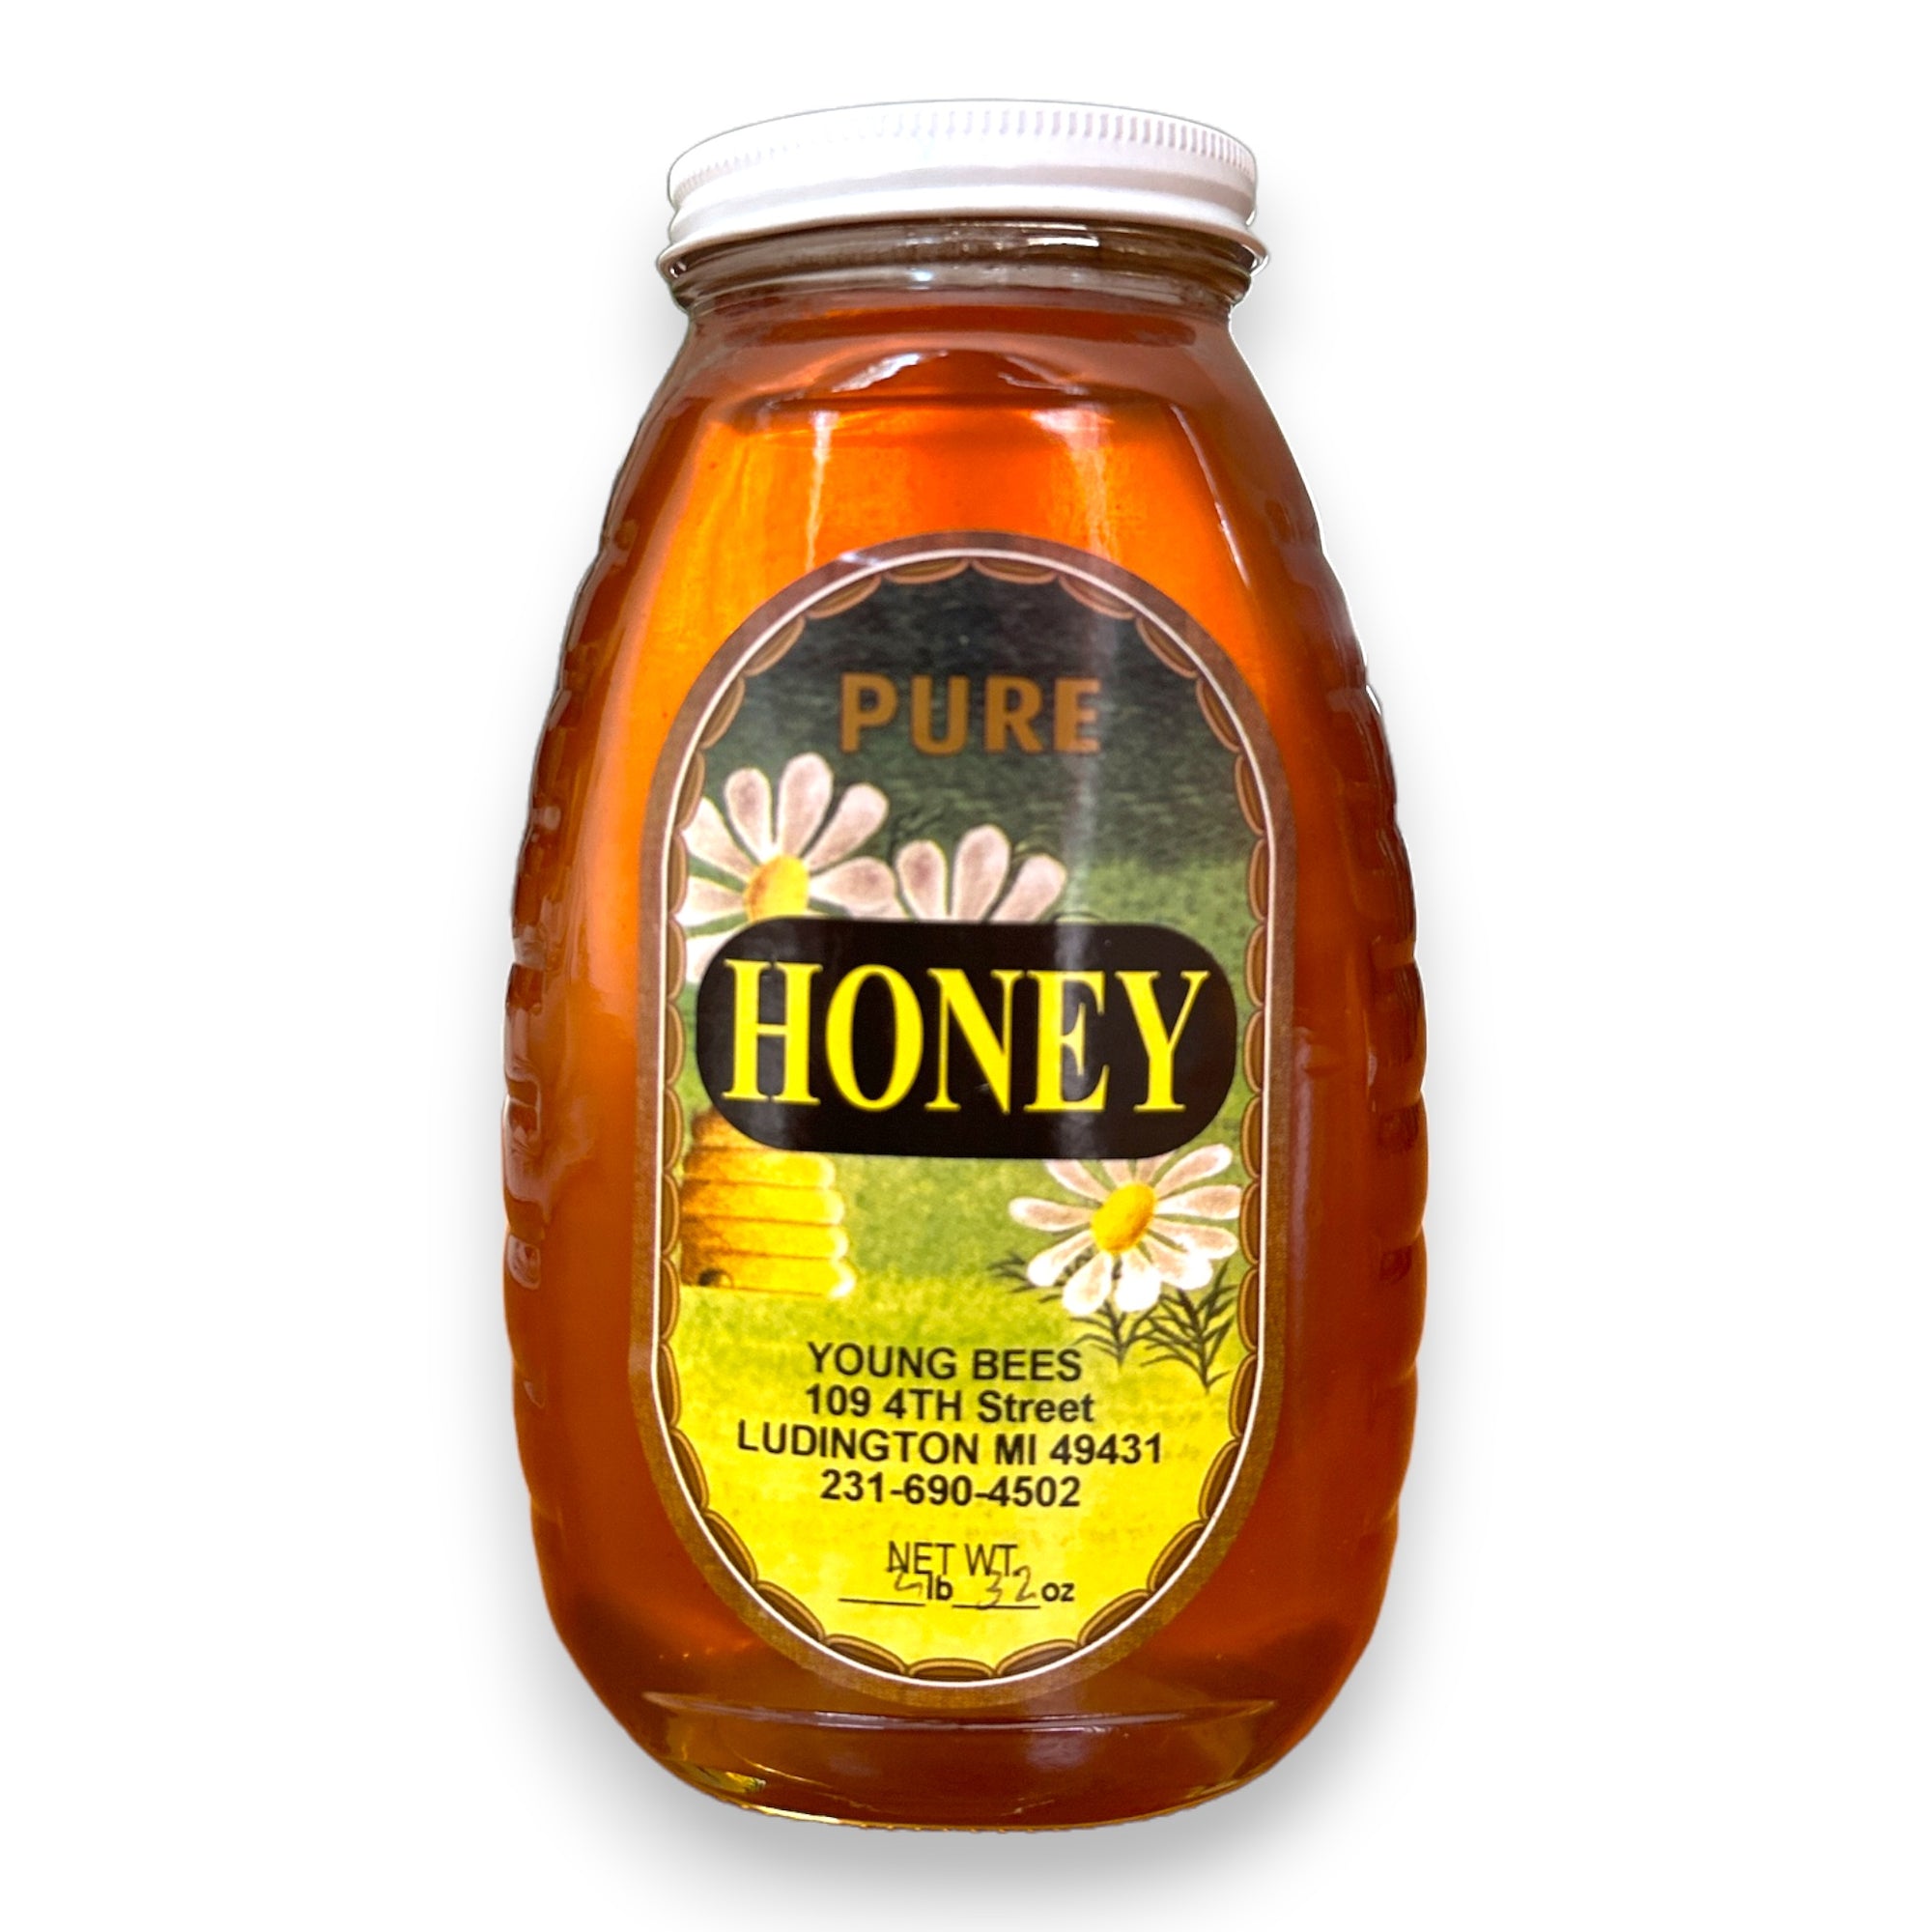 Pure Raw Michigan Honey - Quart Jar - The Roadside